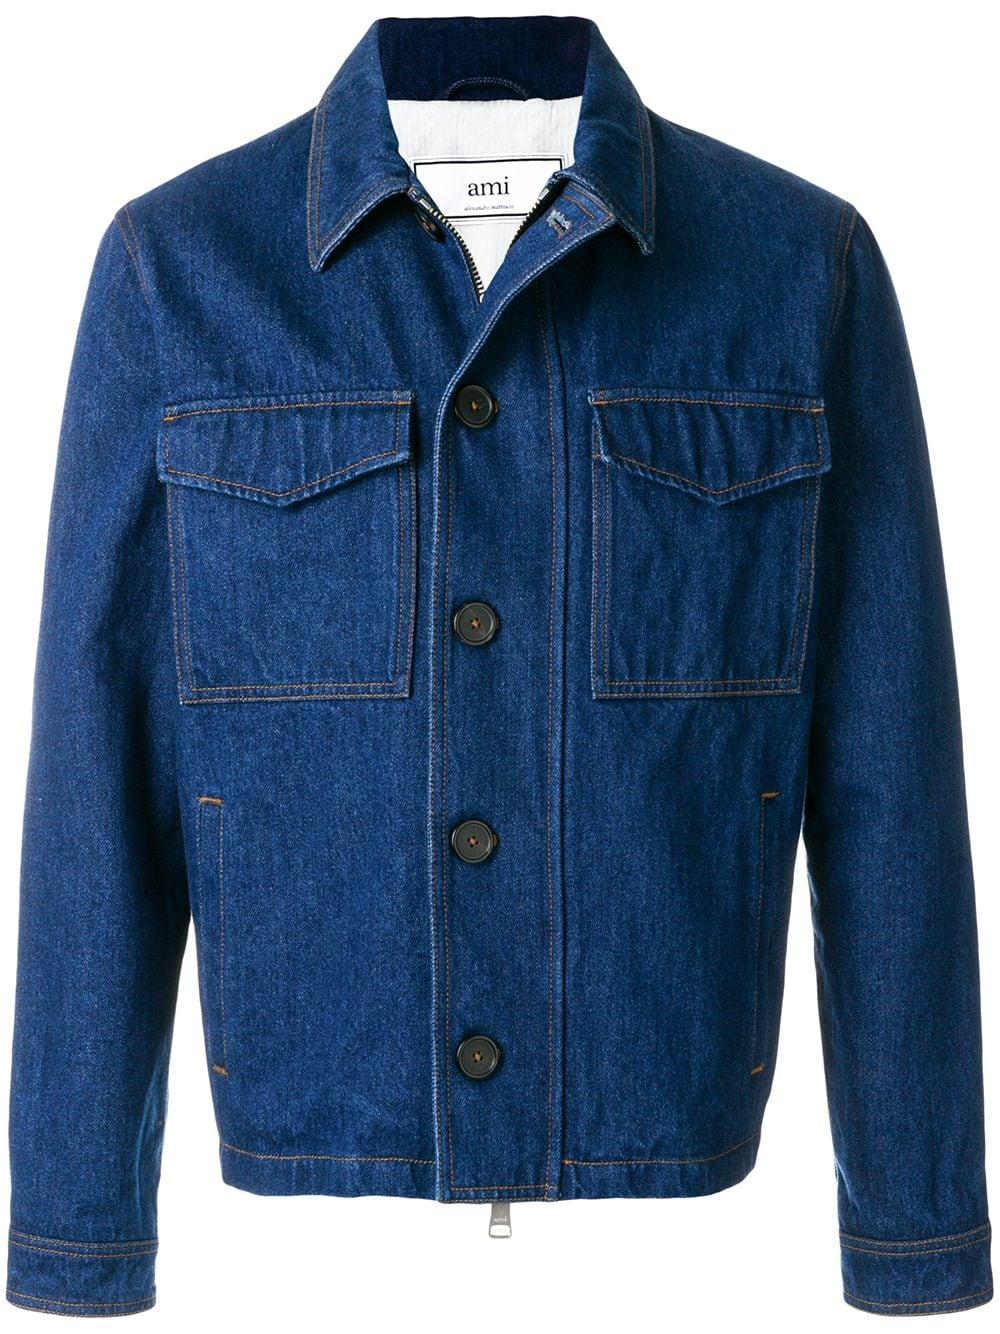 AMI Zipped Denim Jacket in Blue for Men - Lyst